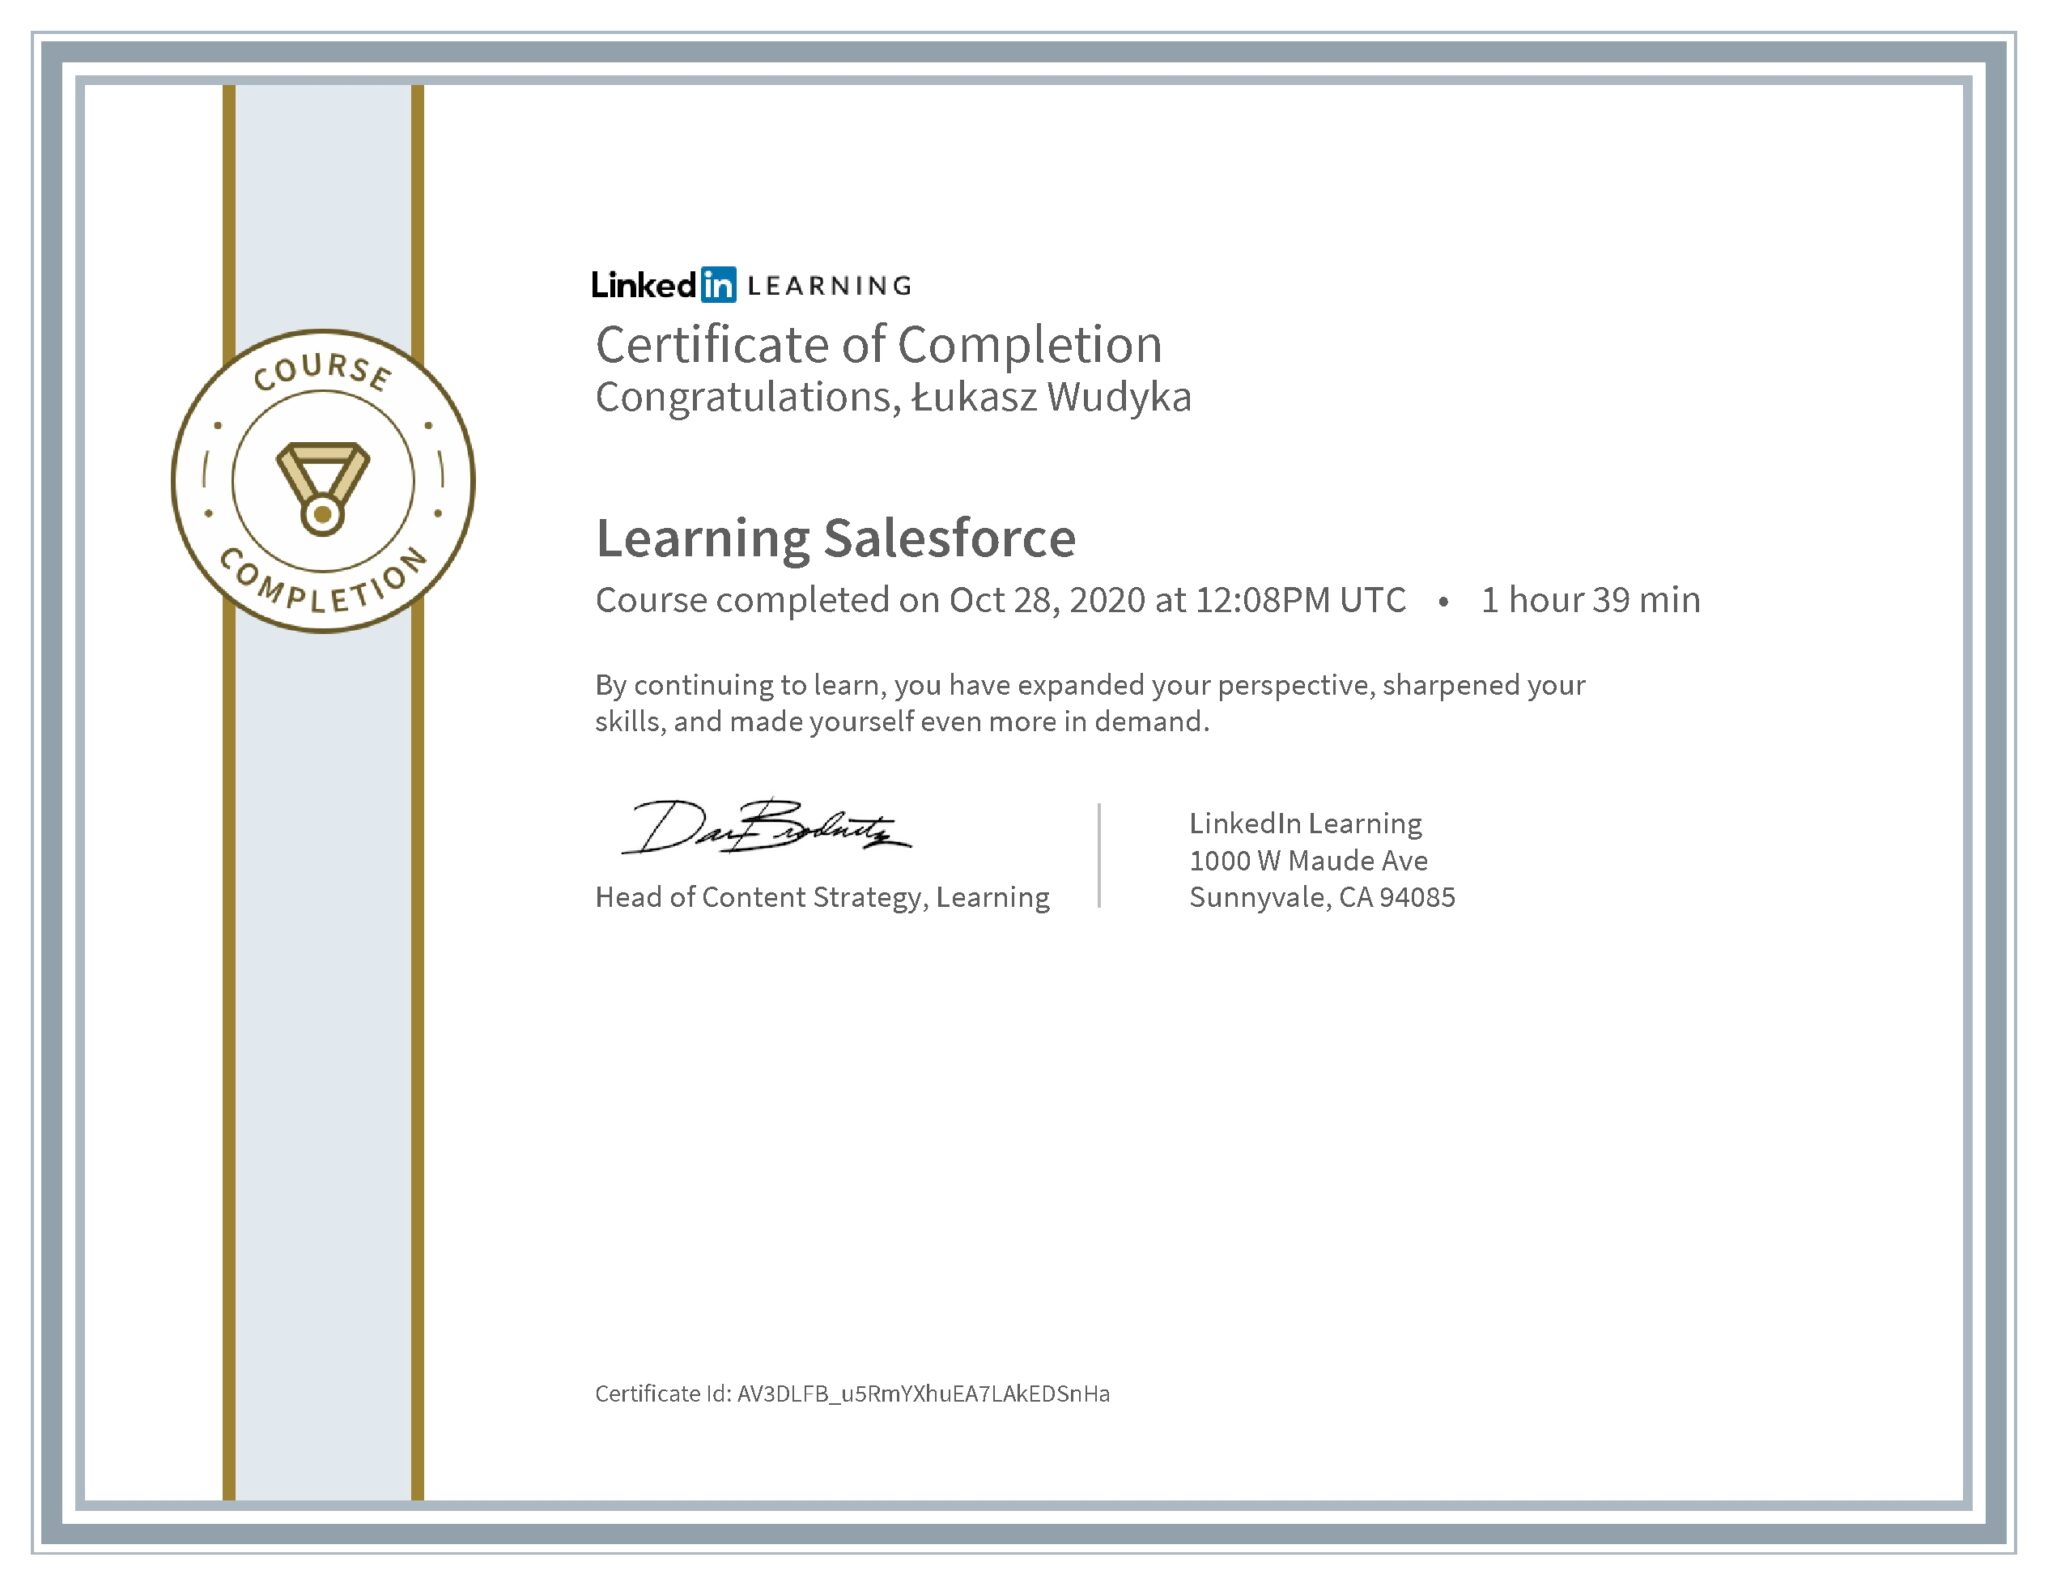 Łukasz Wudyka certyfikat LinkedIn Learning Salesforce